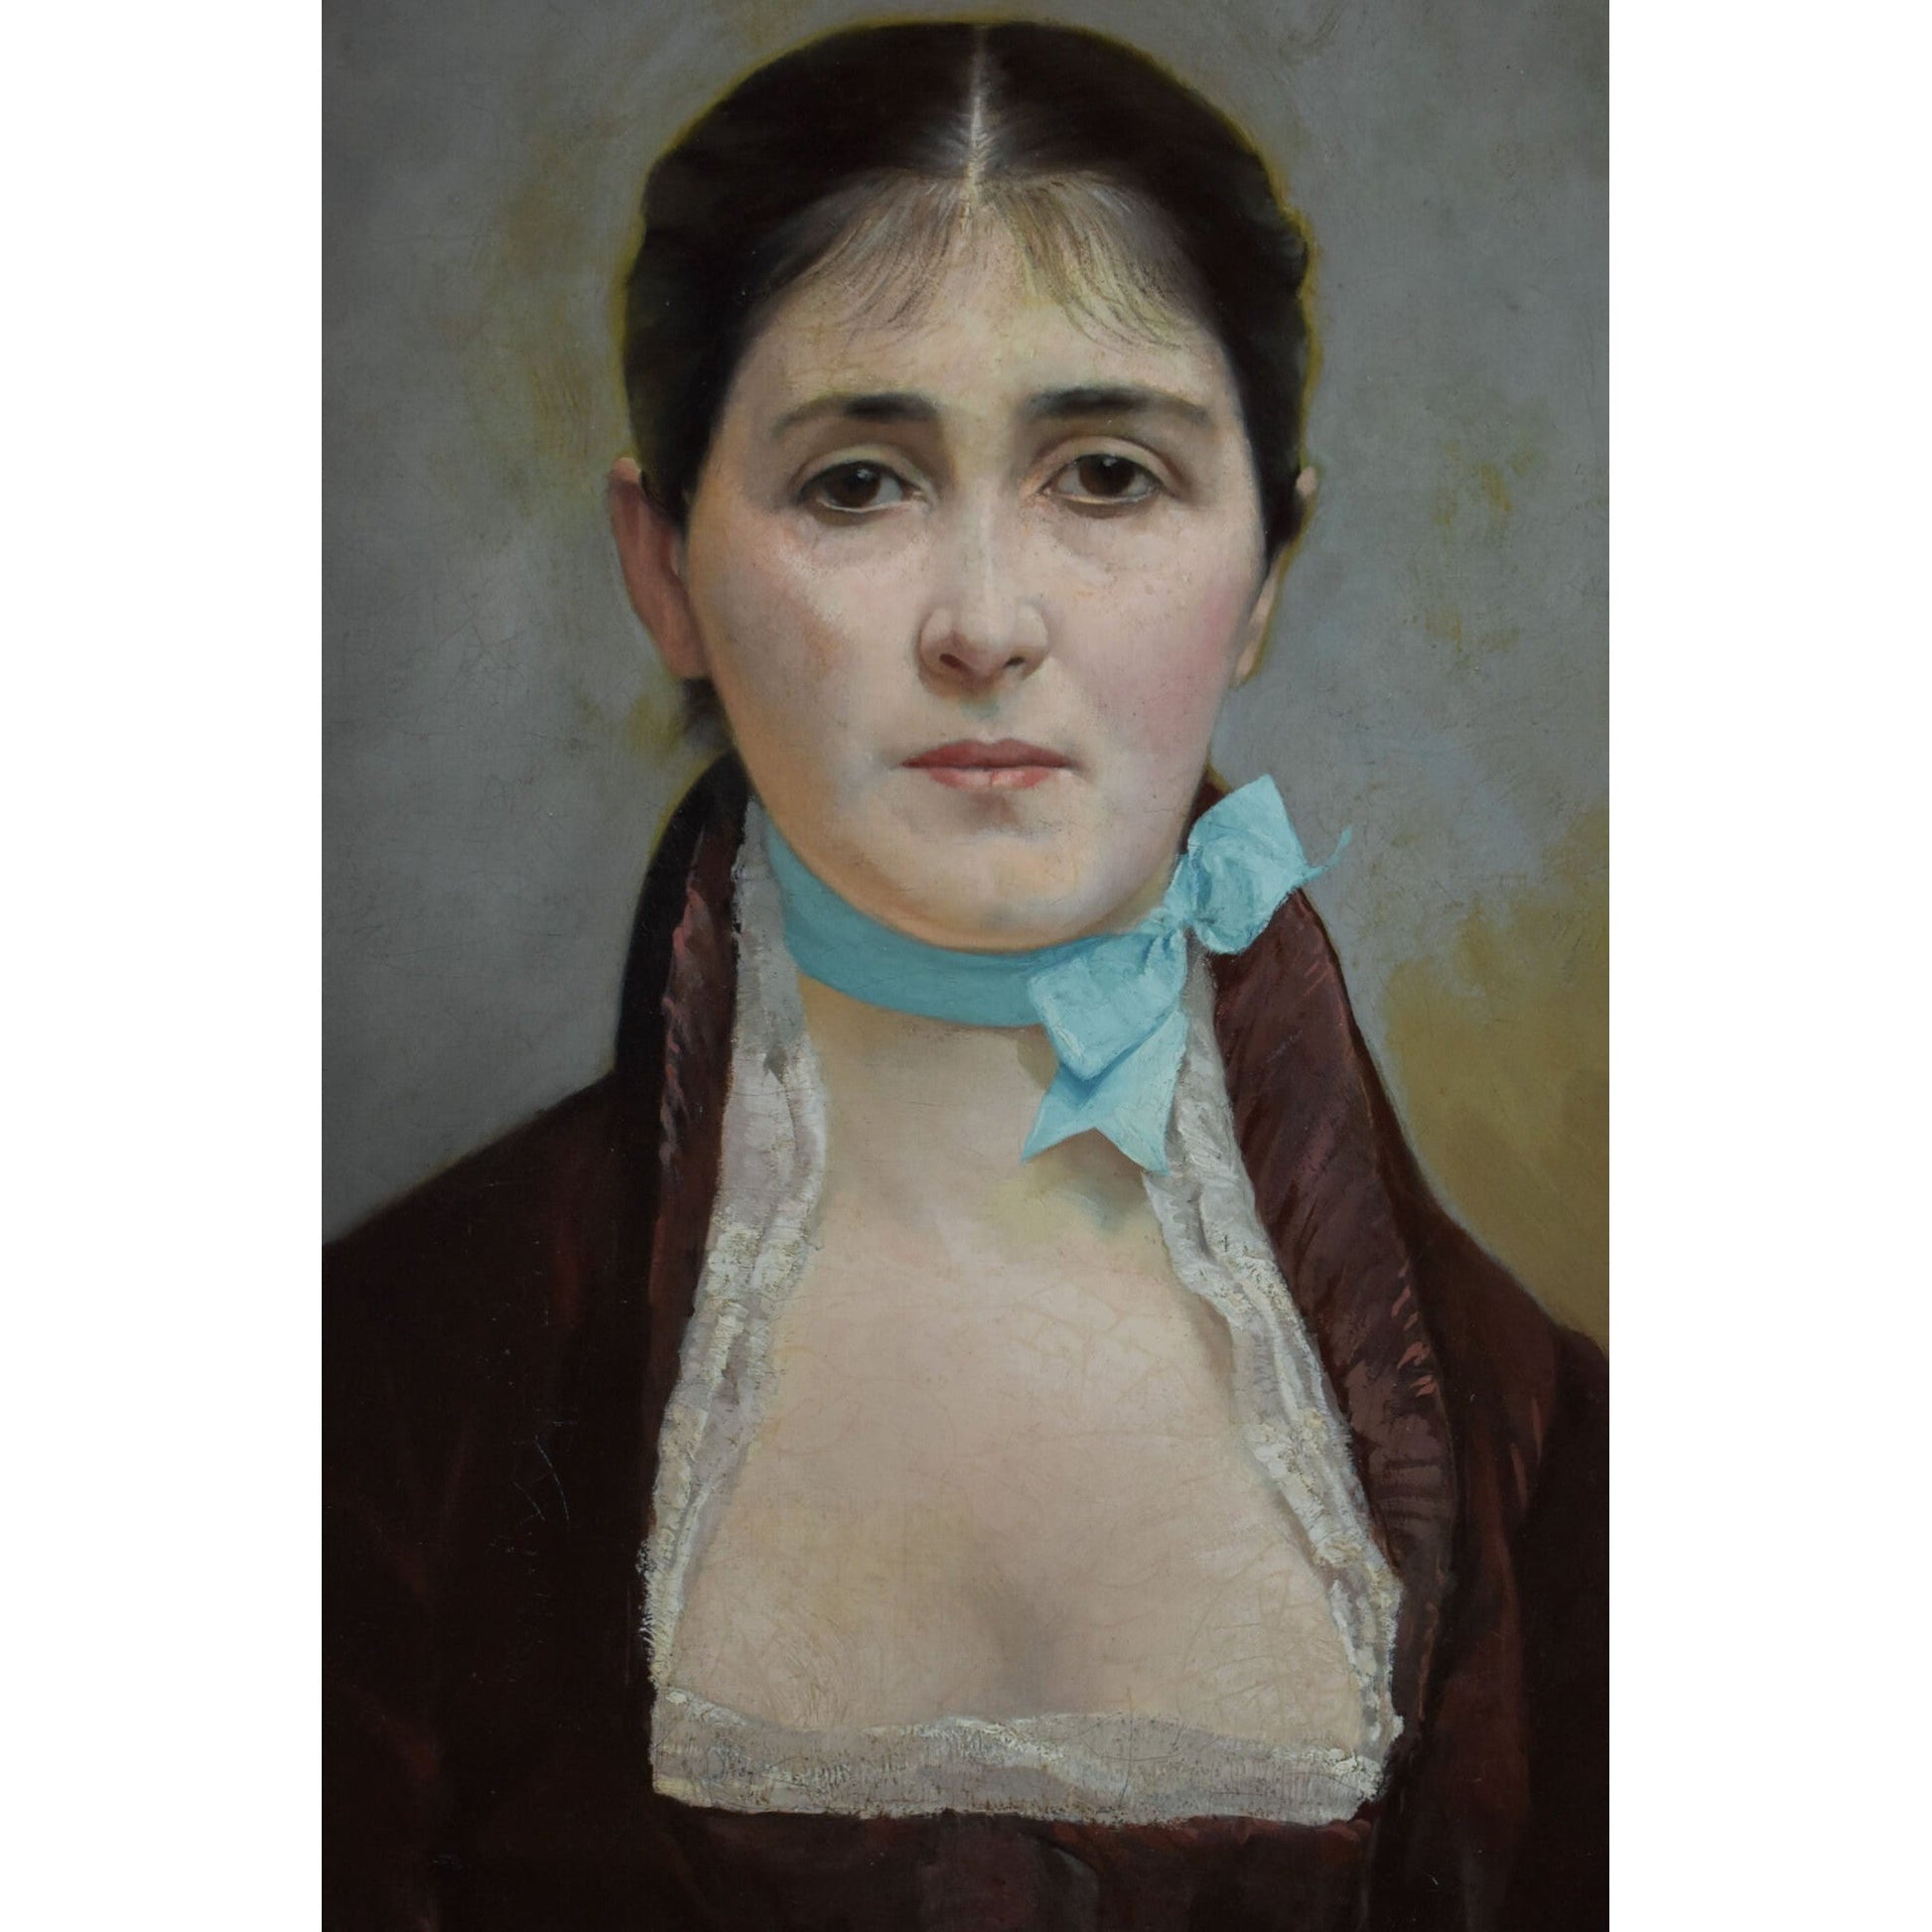 Antique portrait oval painting woman elegant dress 1878 by Georges Saint-Lanne for sale at Winckelmann Gallery